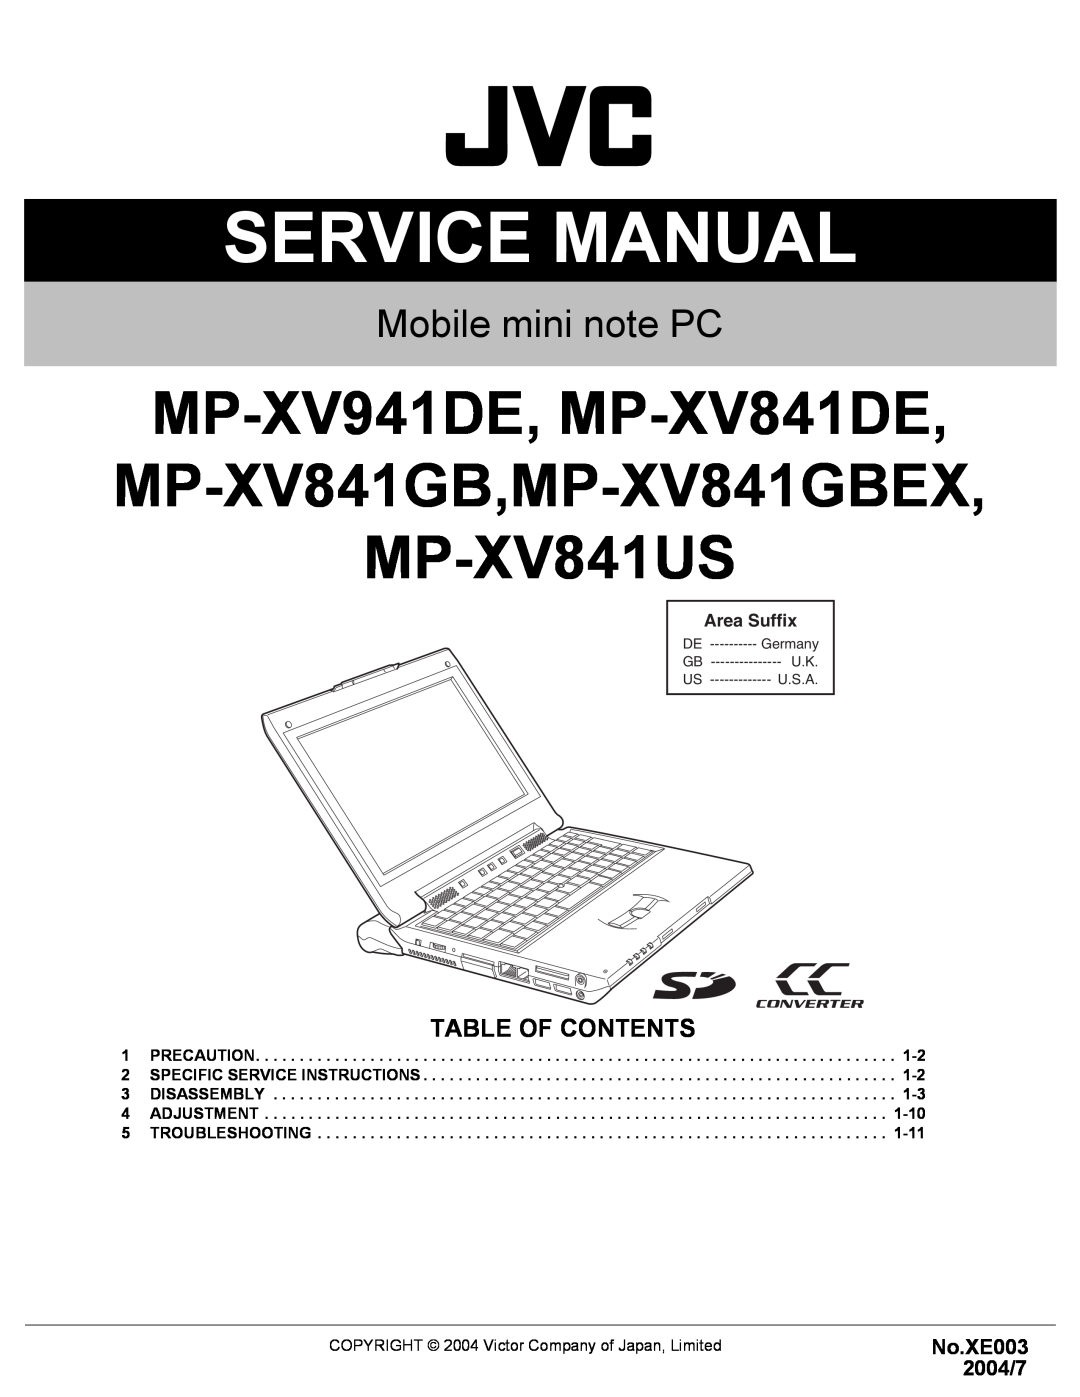 JVC MP-XV841GB service manual Table Of Contents, Service Manual, Mobile mini note PC, No.XE003 2004/7, Area Suffix 